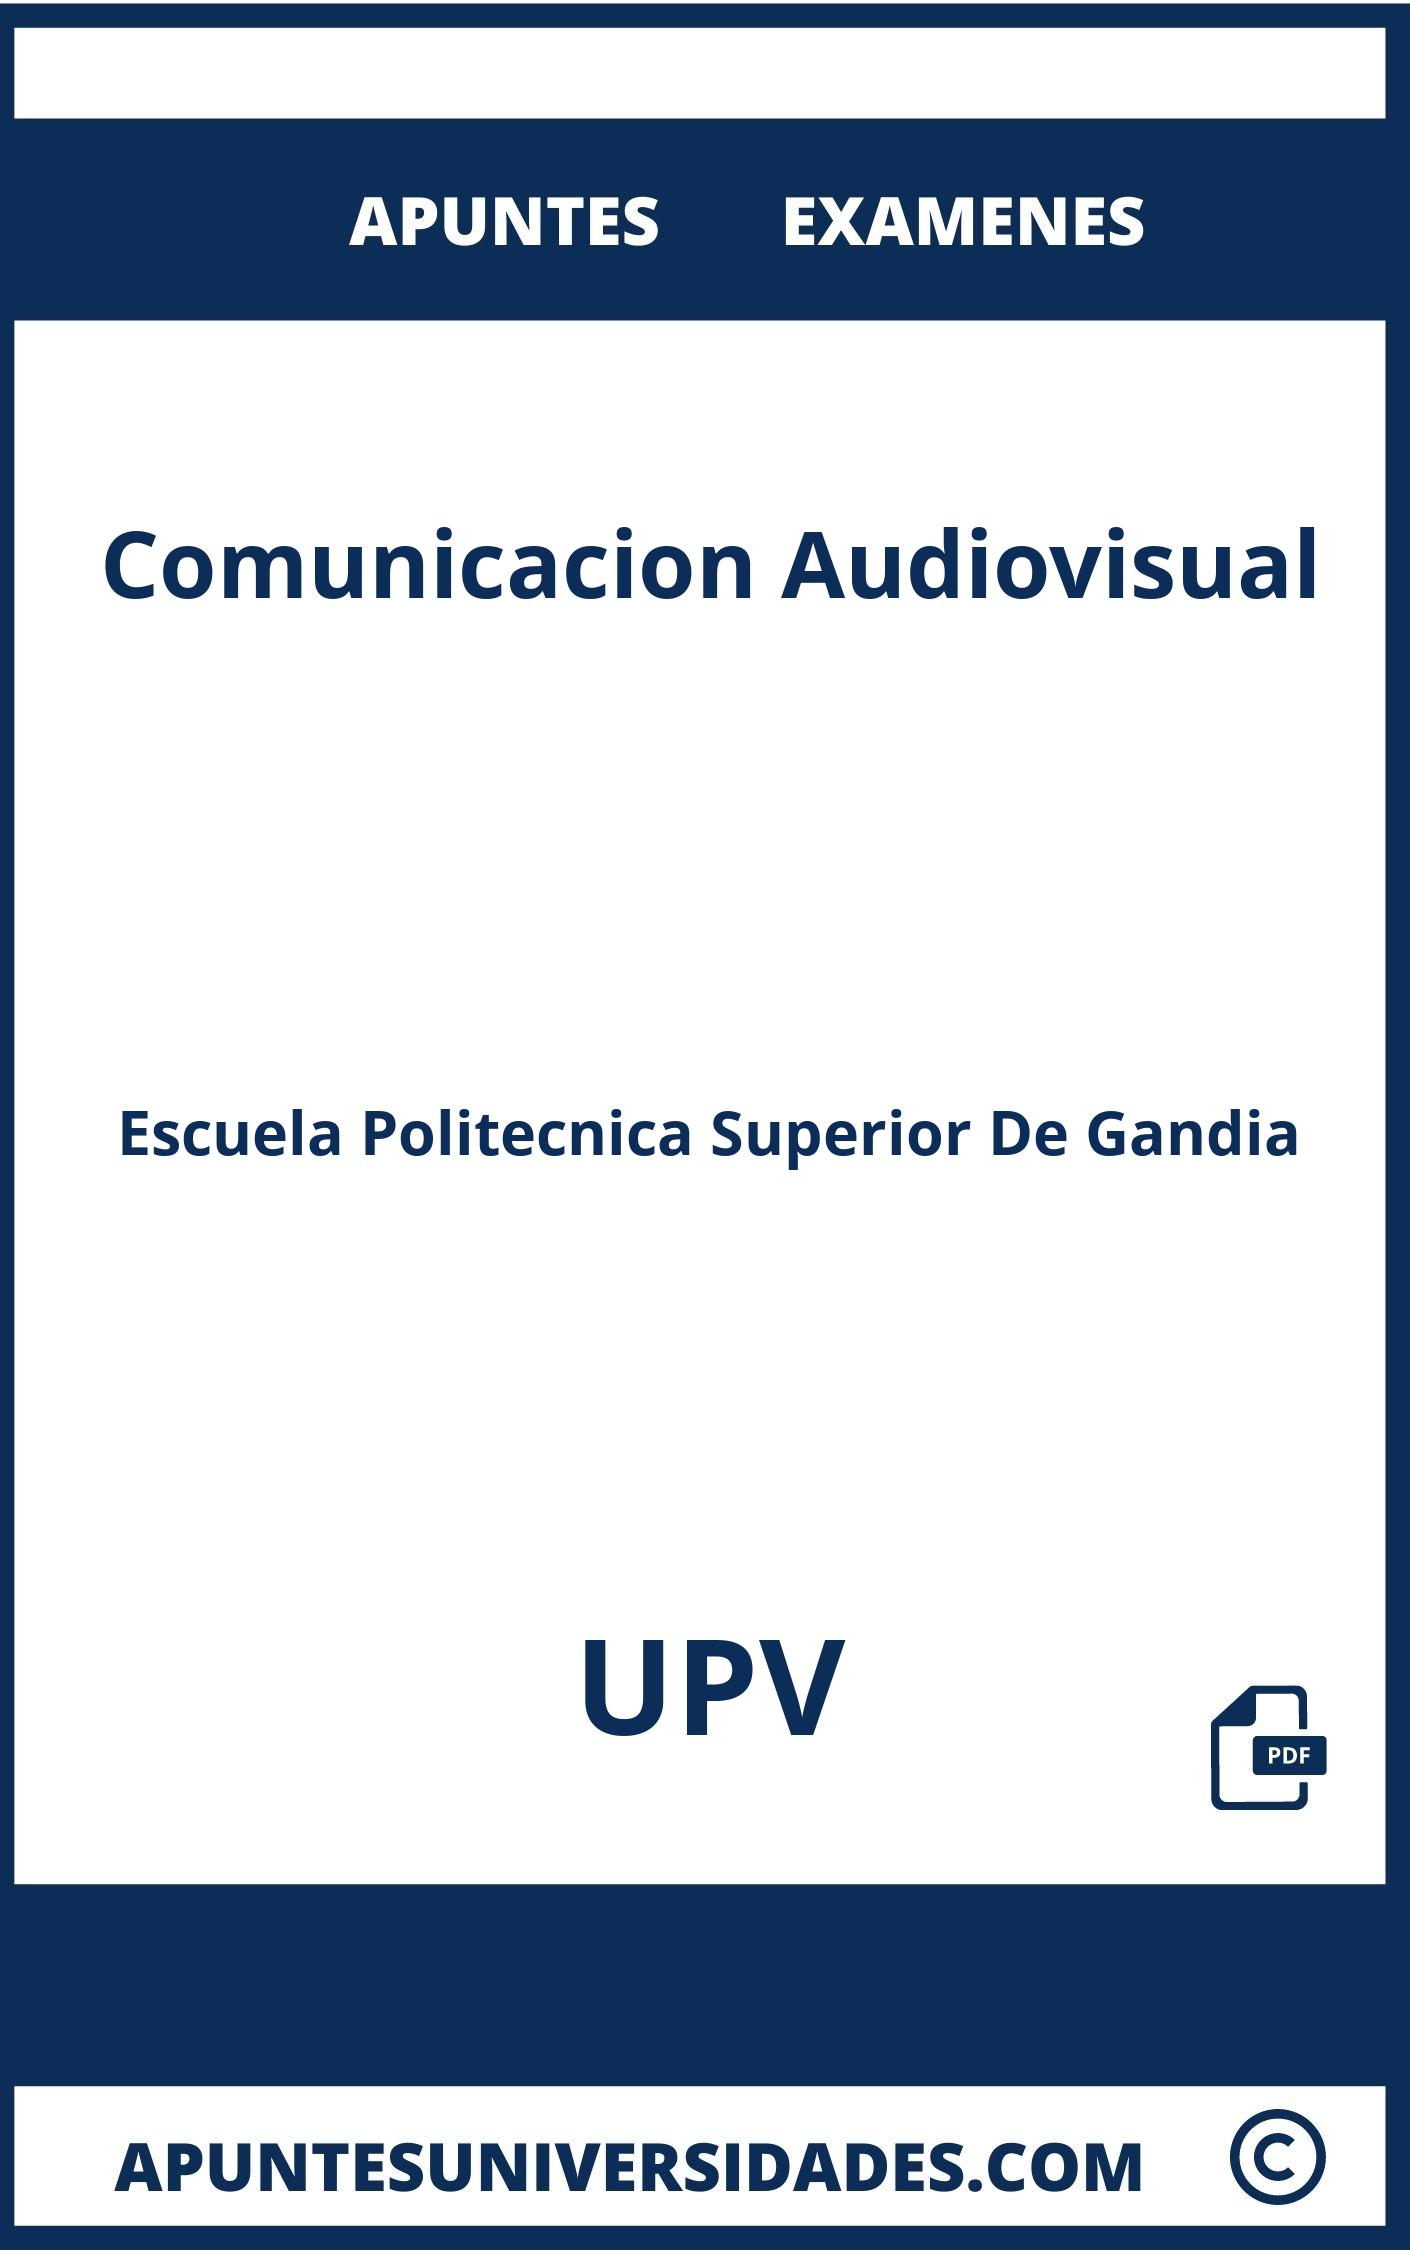 Apuntes Examenes Comunicacion Audiovisual UPV